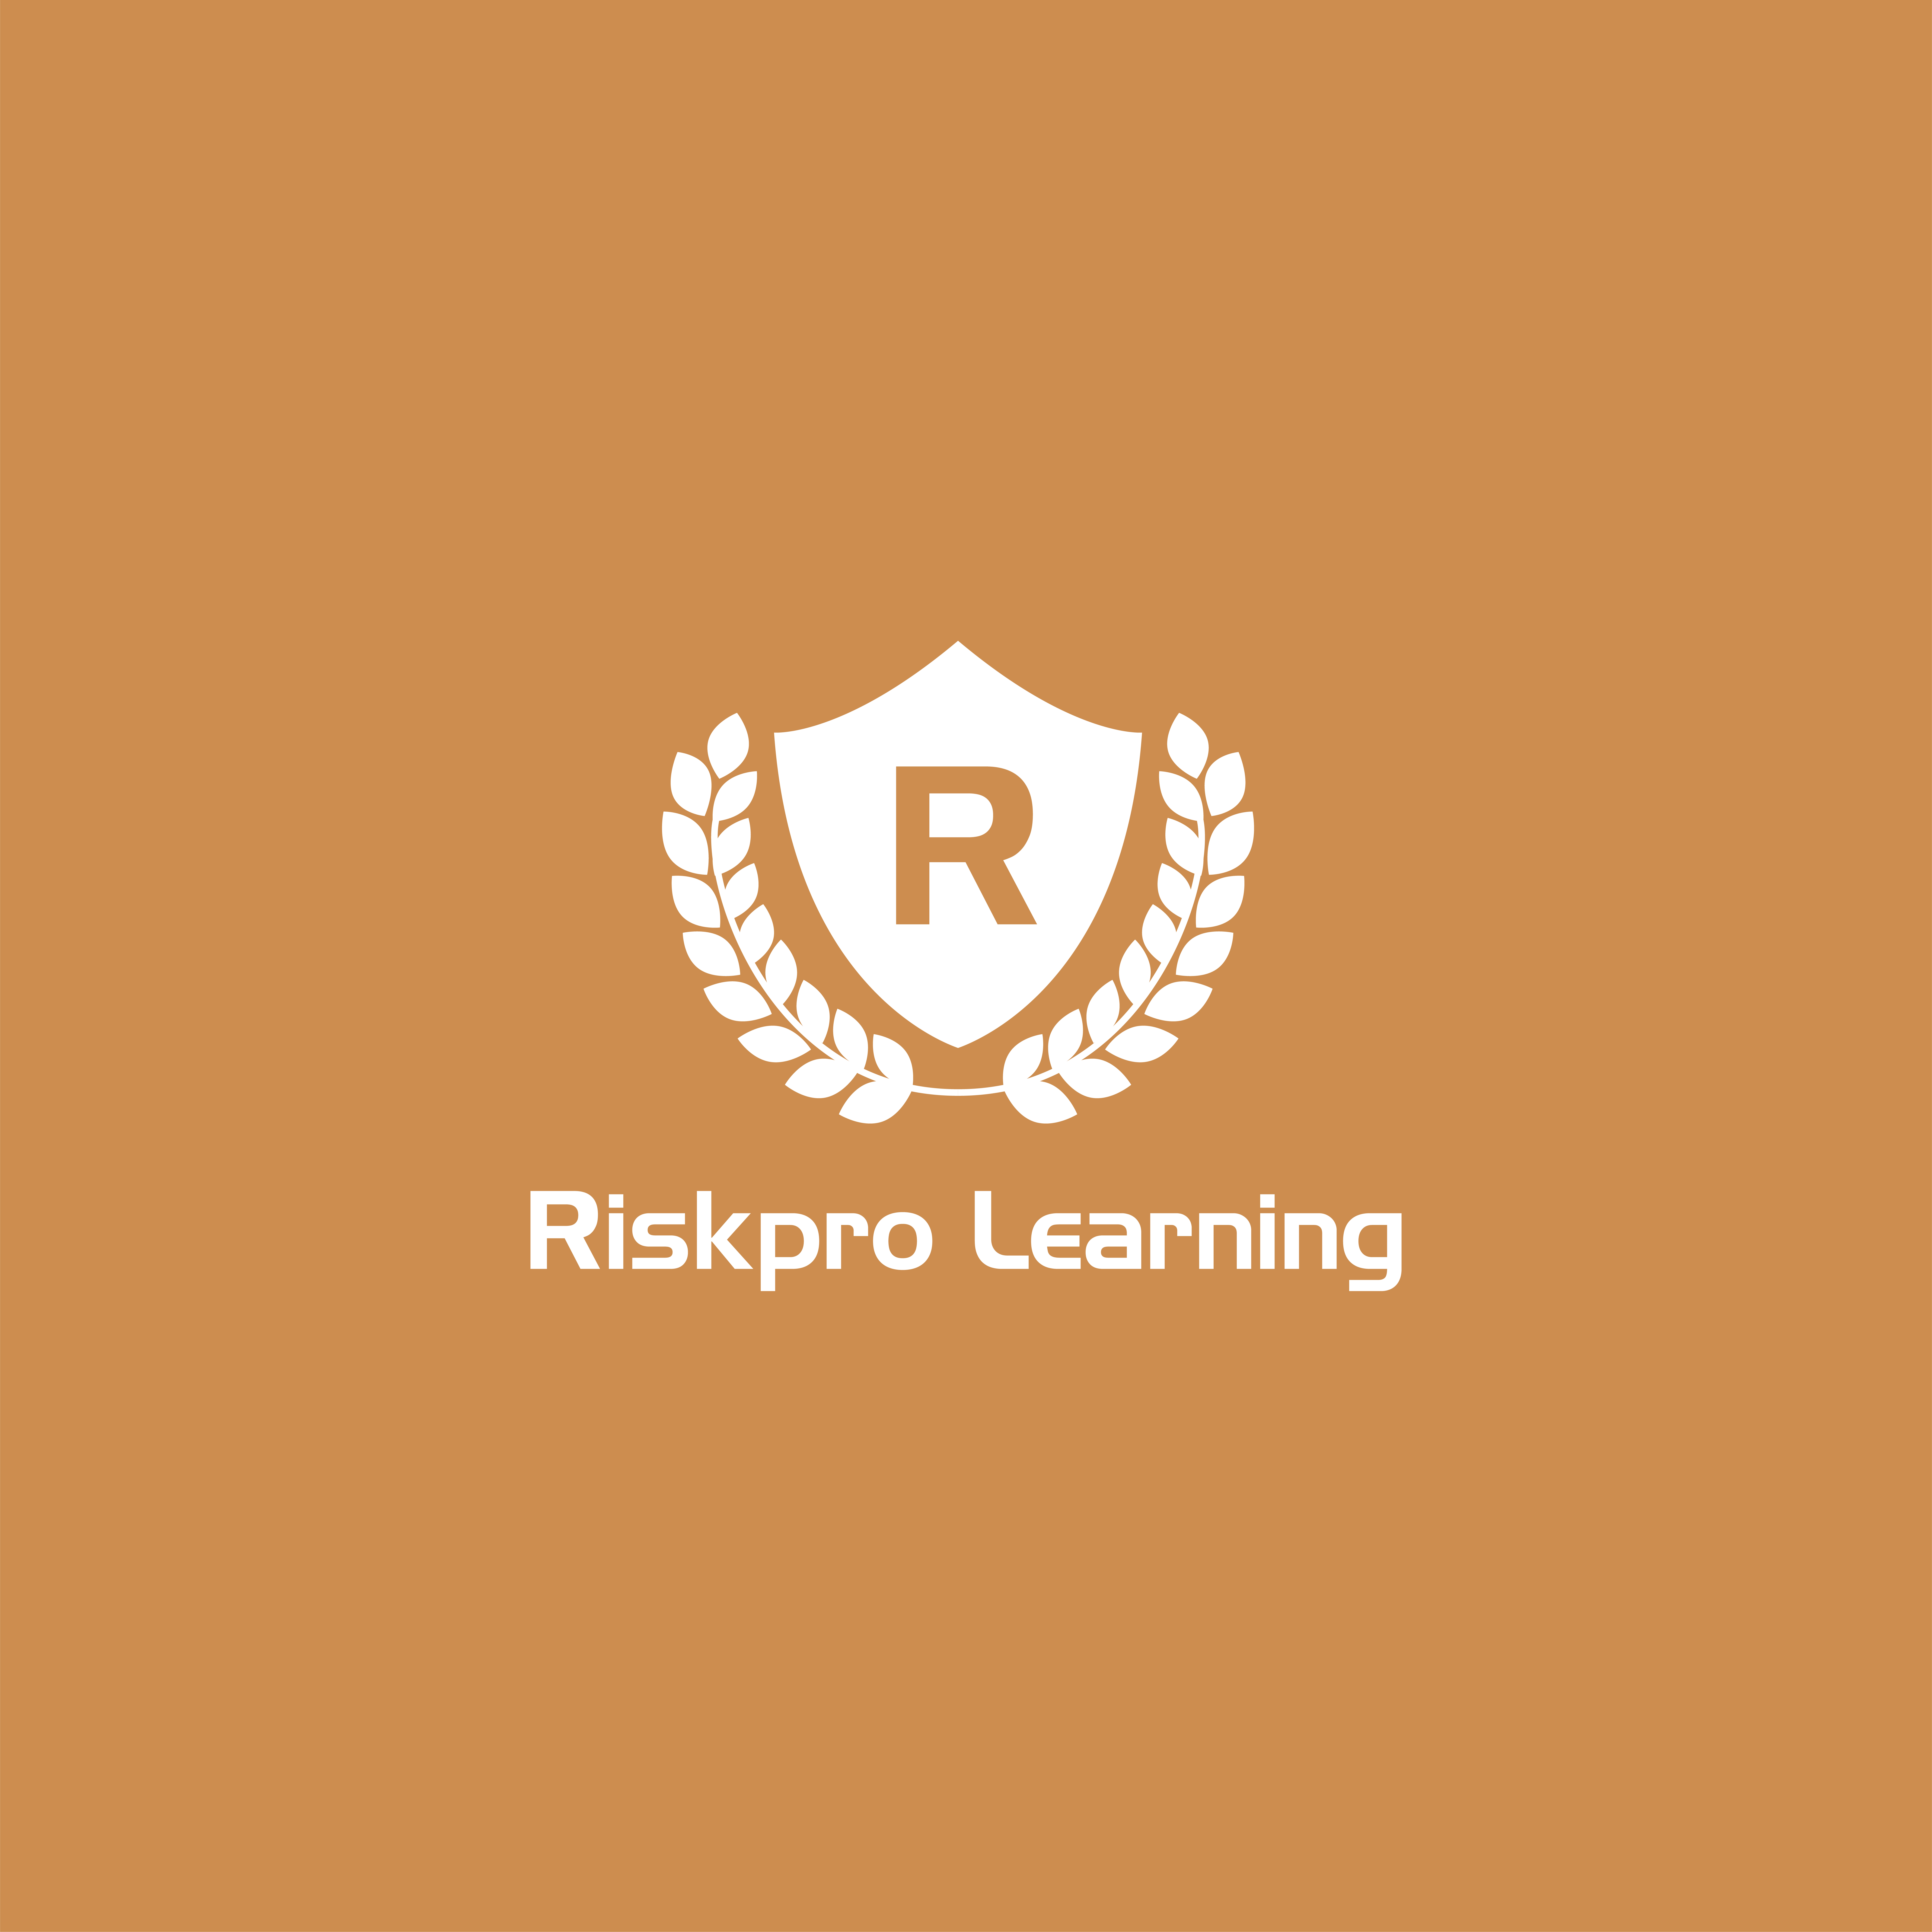 Riskpro Learning